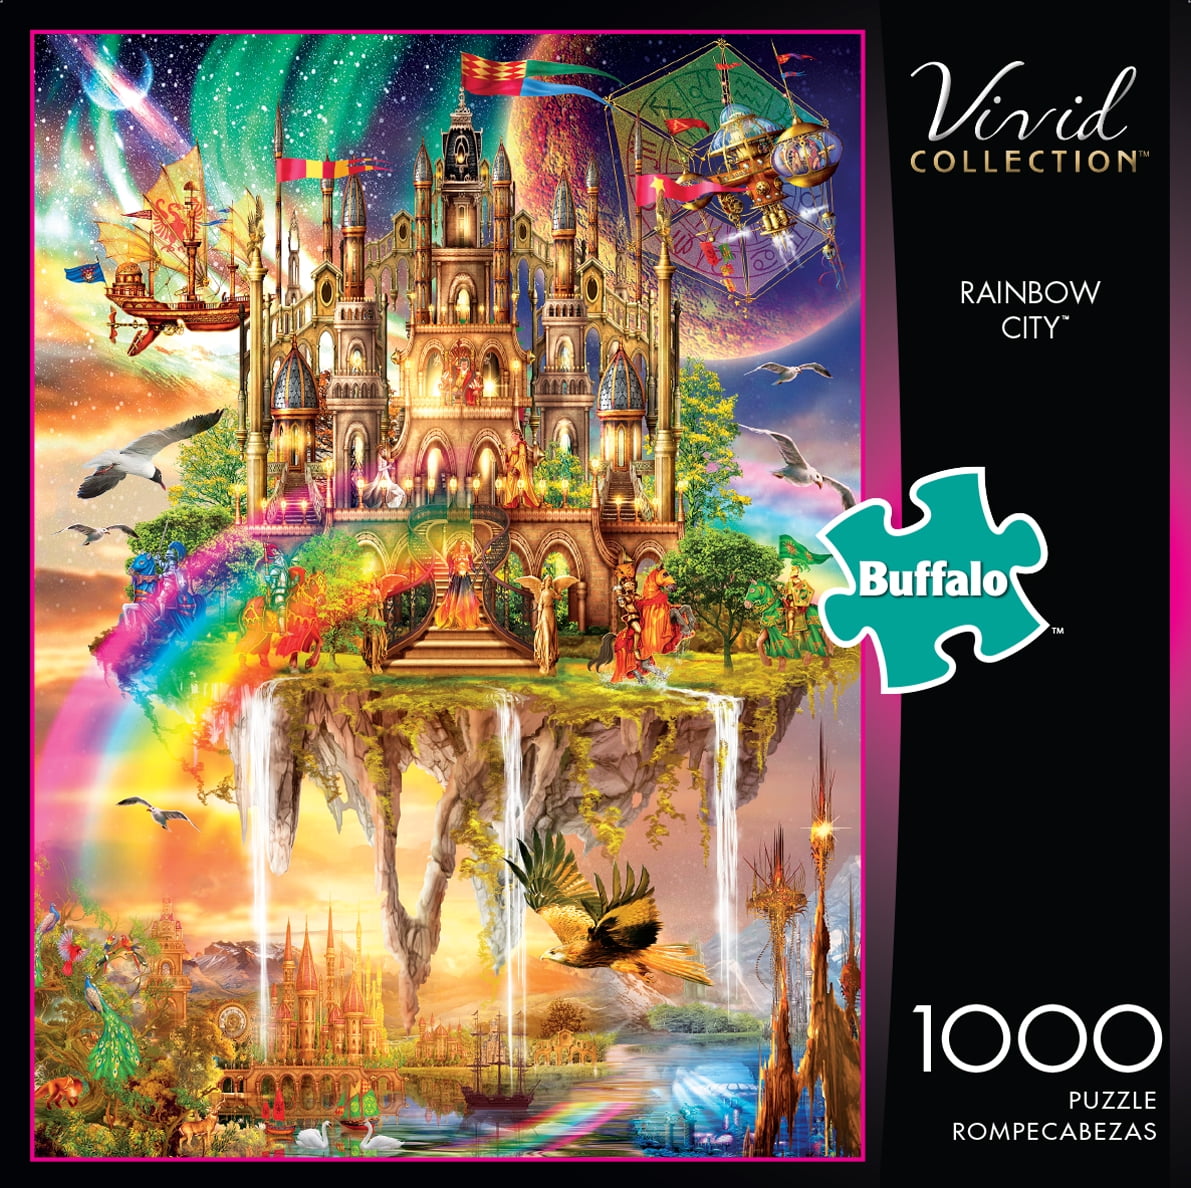 Buffalo Vivid Collection Rainbow City 1000 Pieces Puzzle -